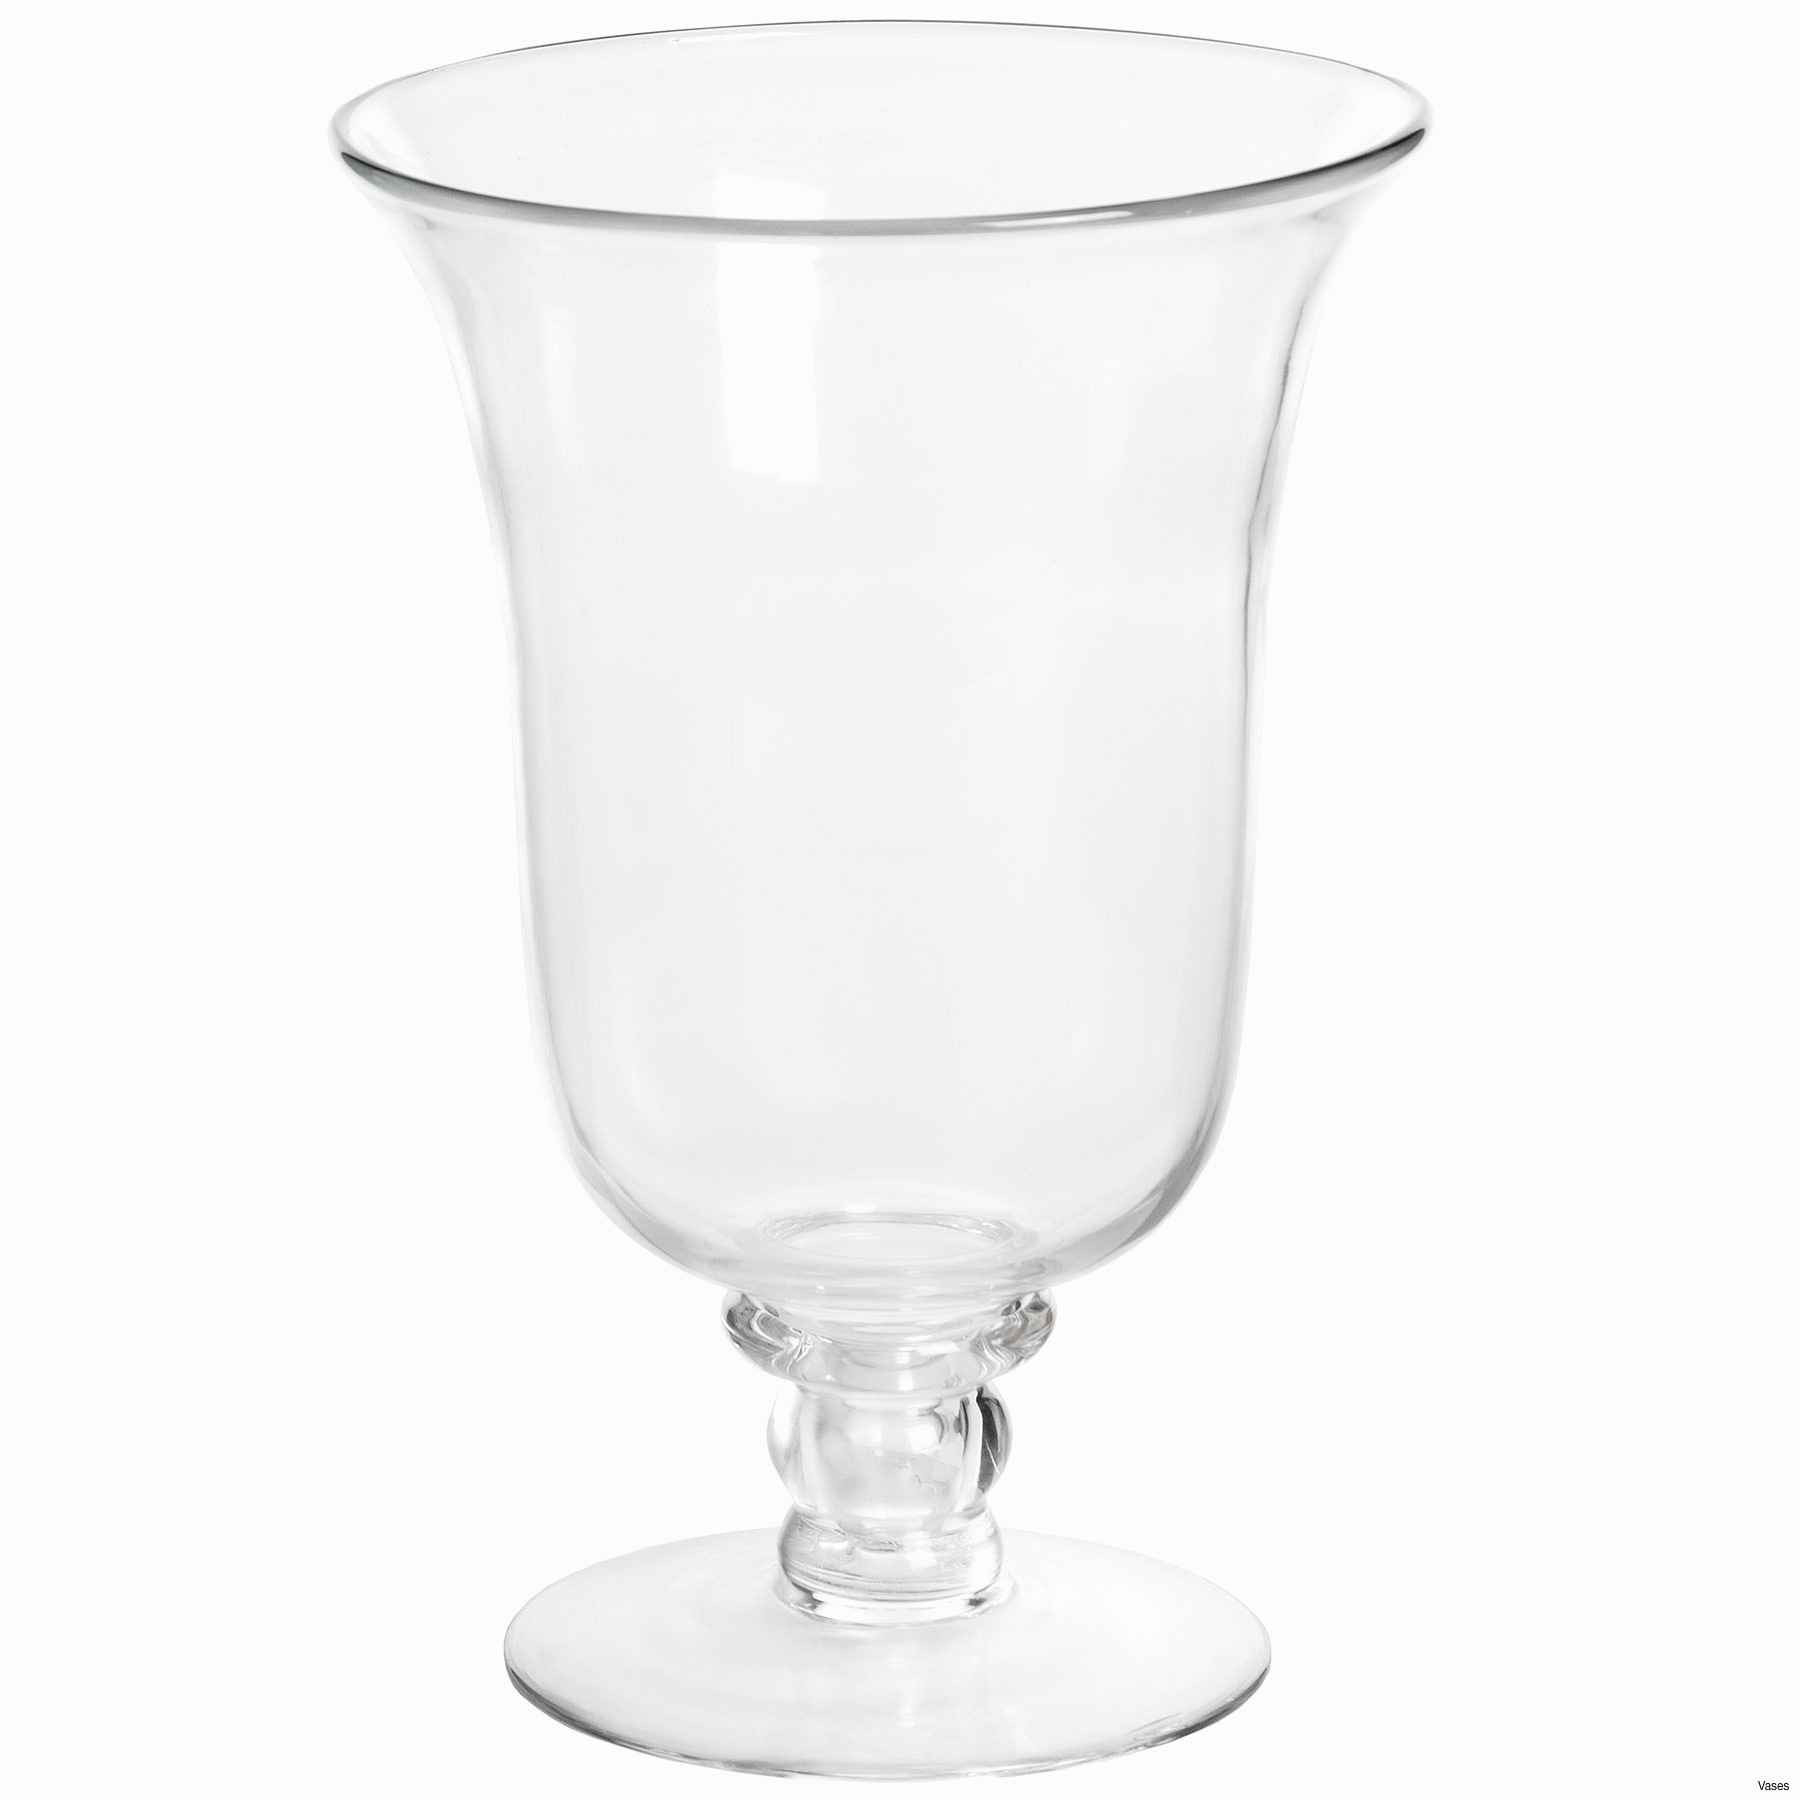 13 Unique Bulk Order Vases Decorative Vase Ideas for dimensions 1800 X 1800